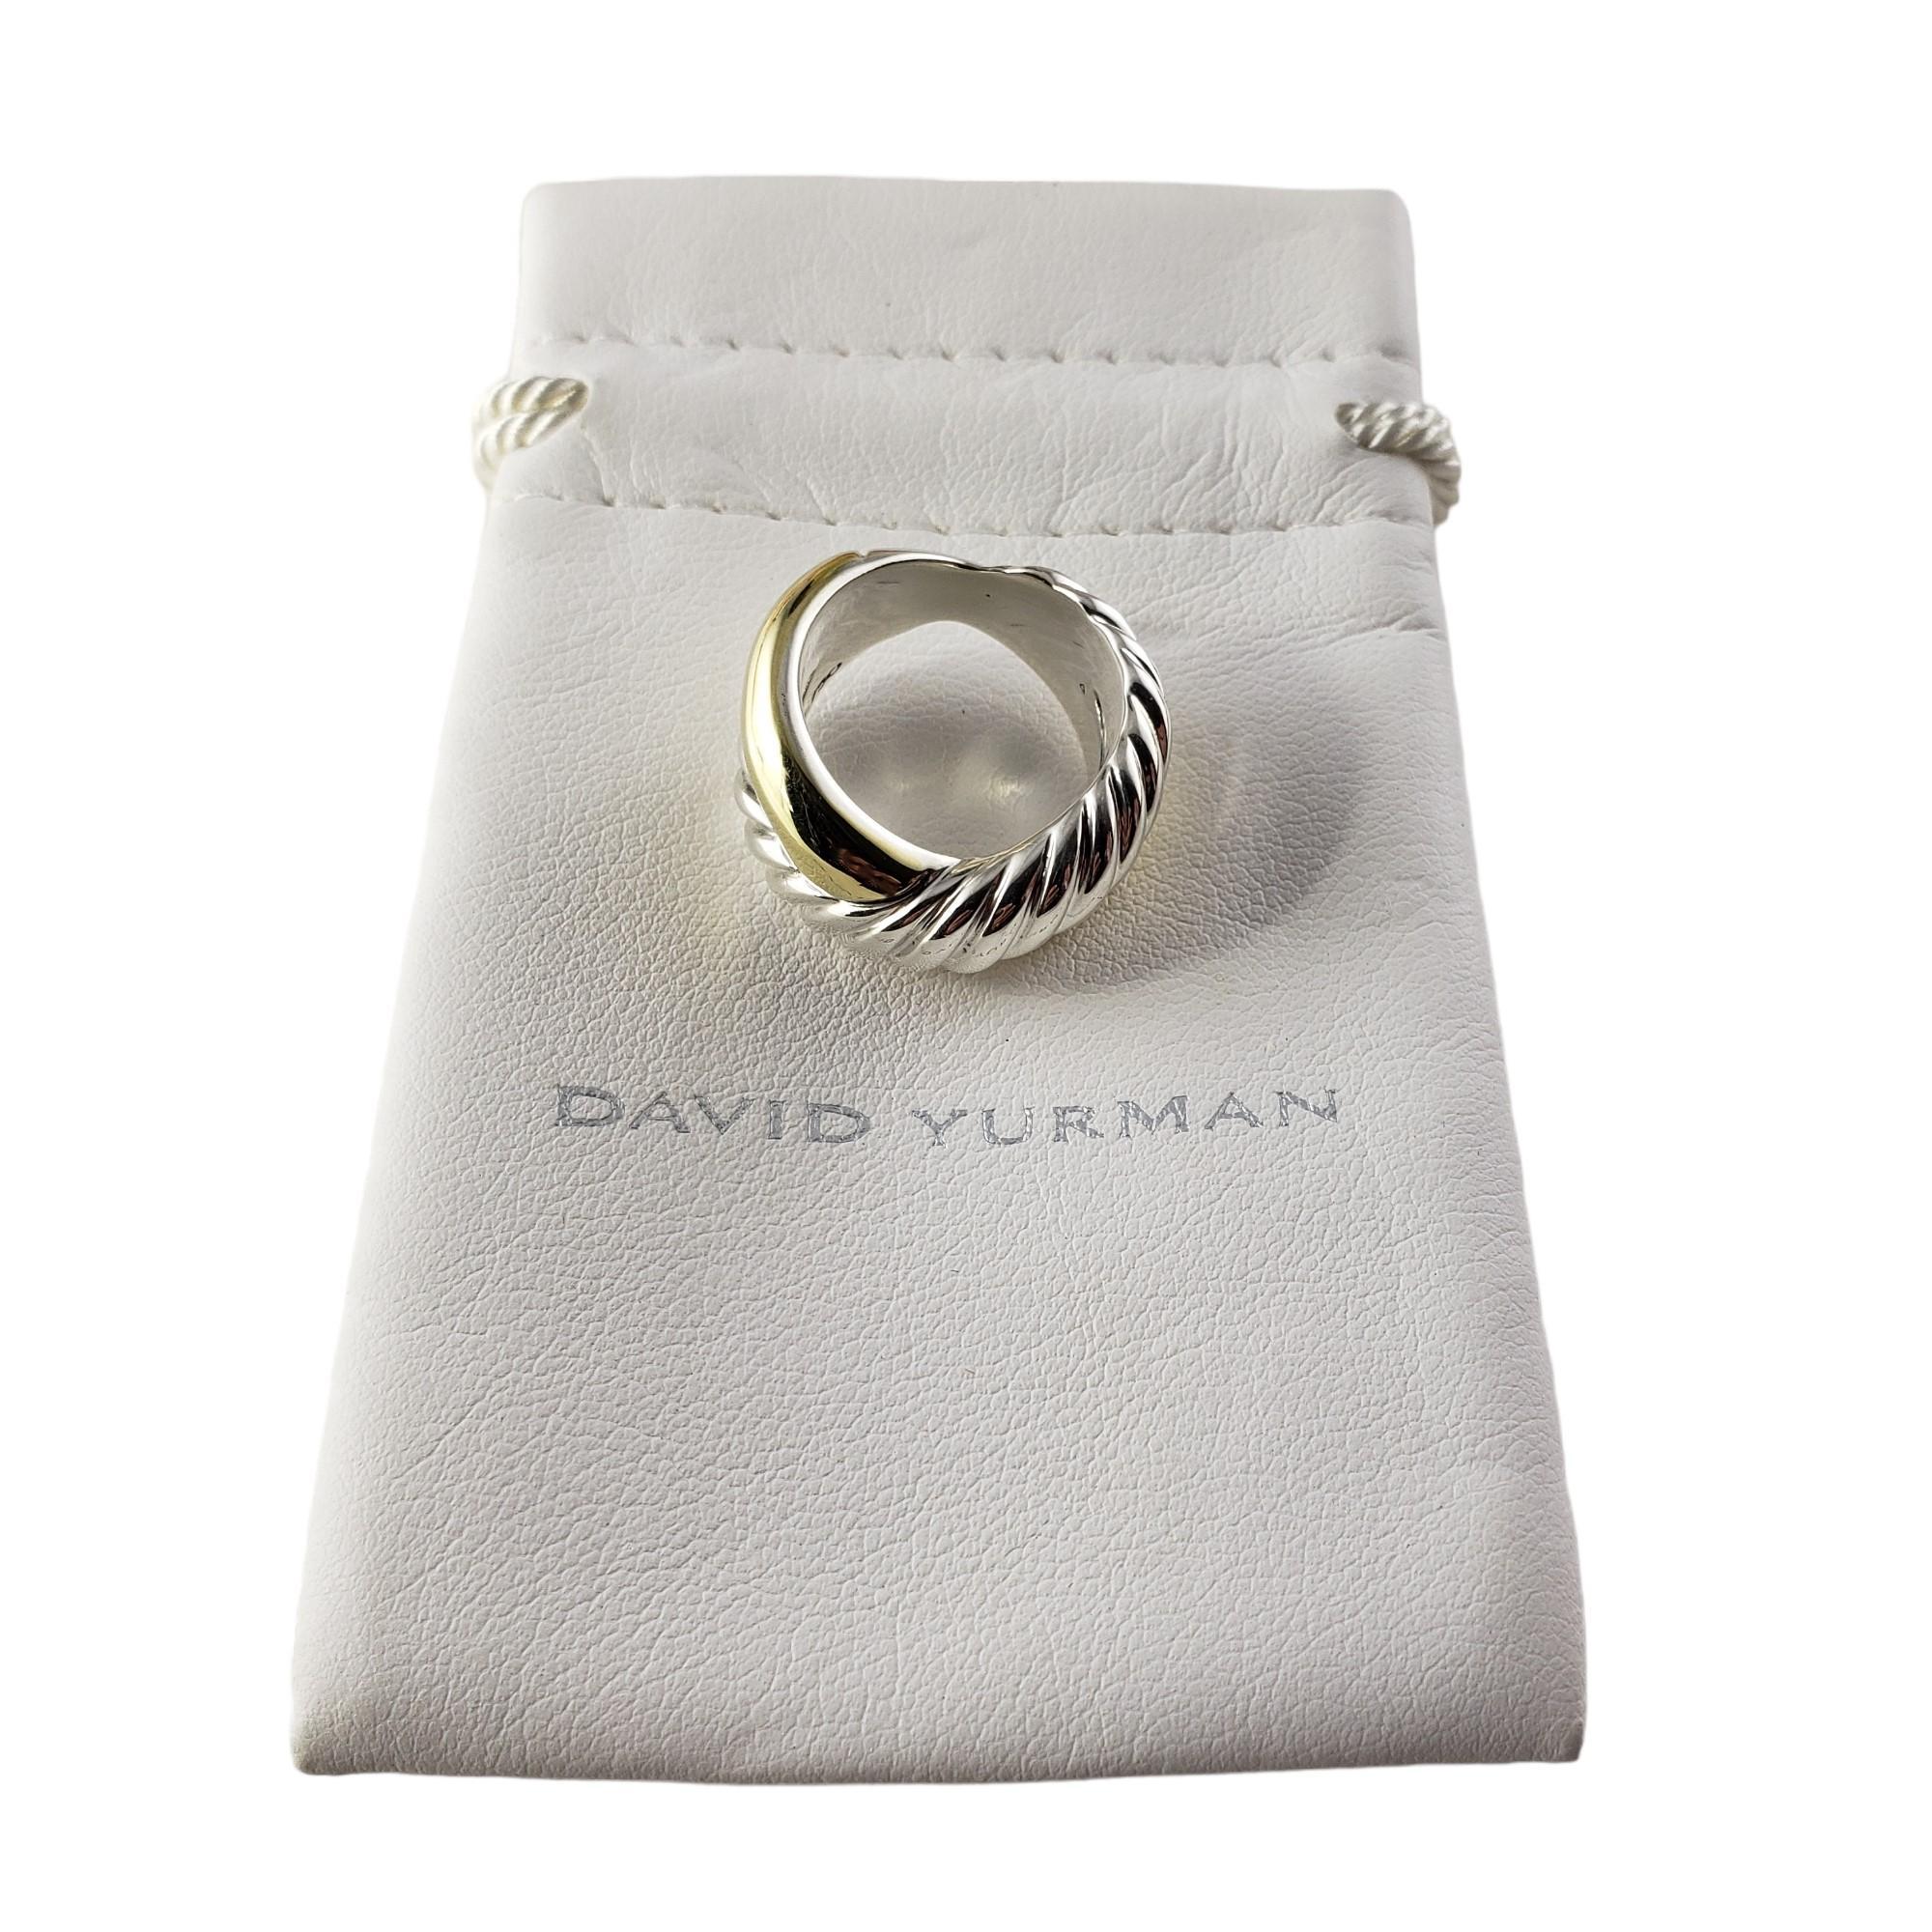 Women's David Yurman Sterling Silver and 18K Yellow Gold Ring Size 6 #15399